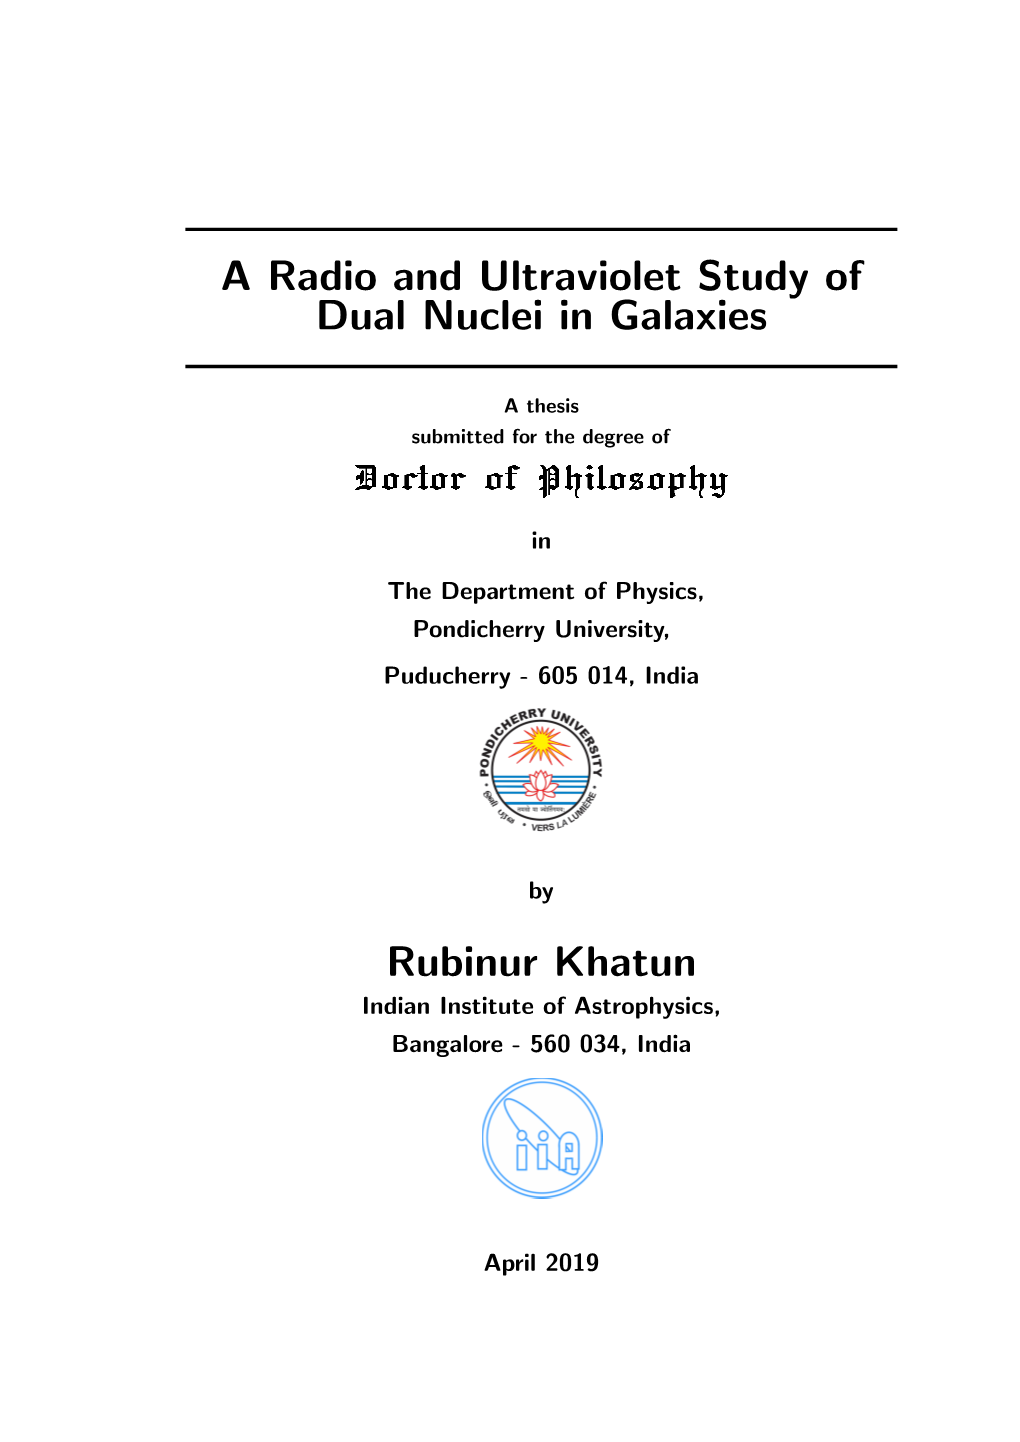 A Radio and Ultraviolet Study of Dual Nuclei in Galaxies Rubinur Khatun